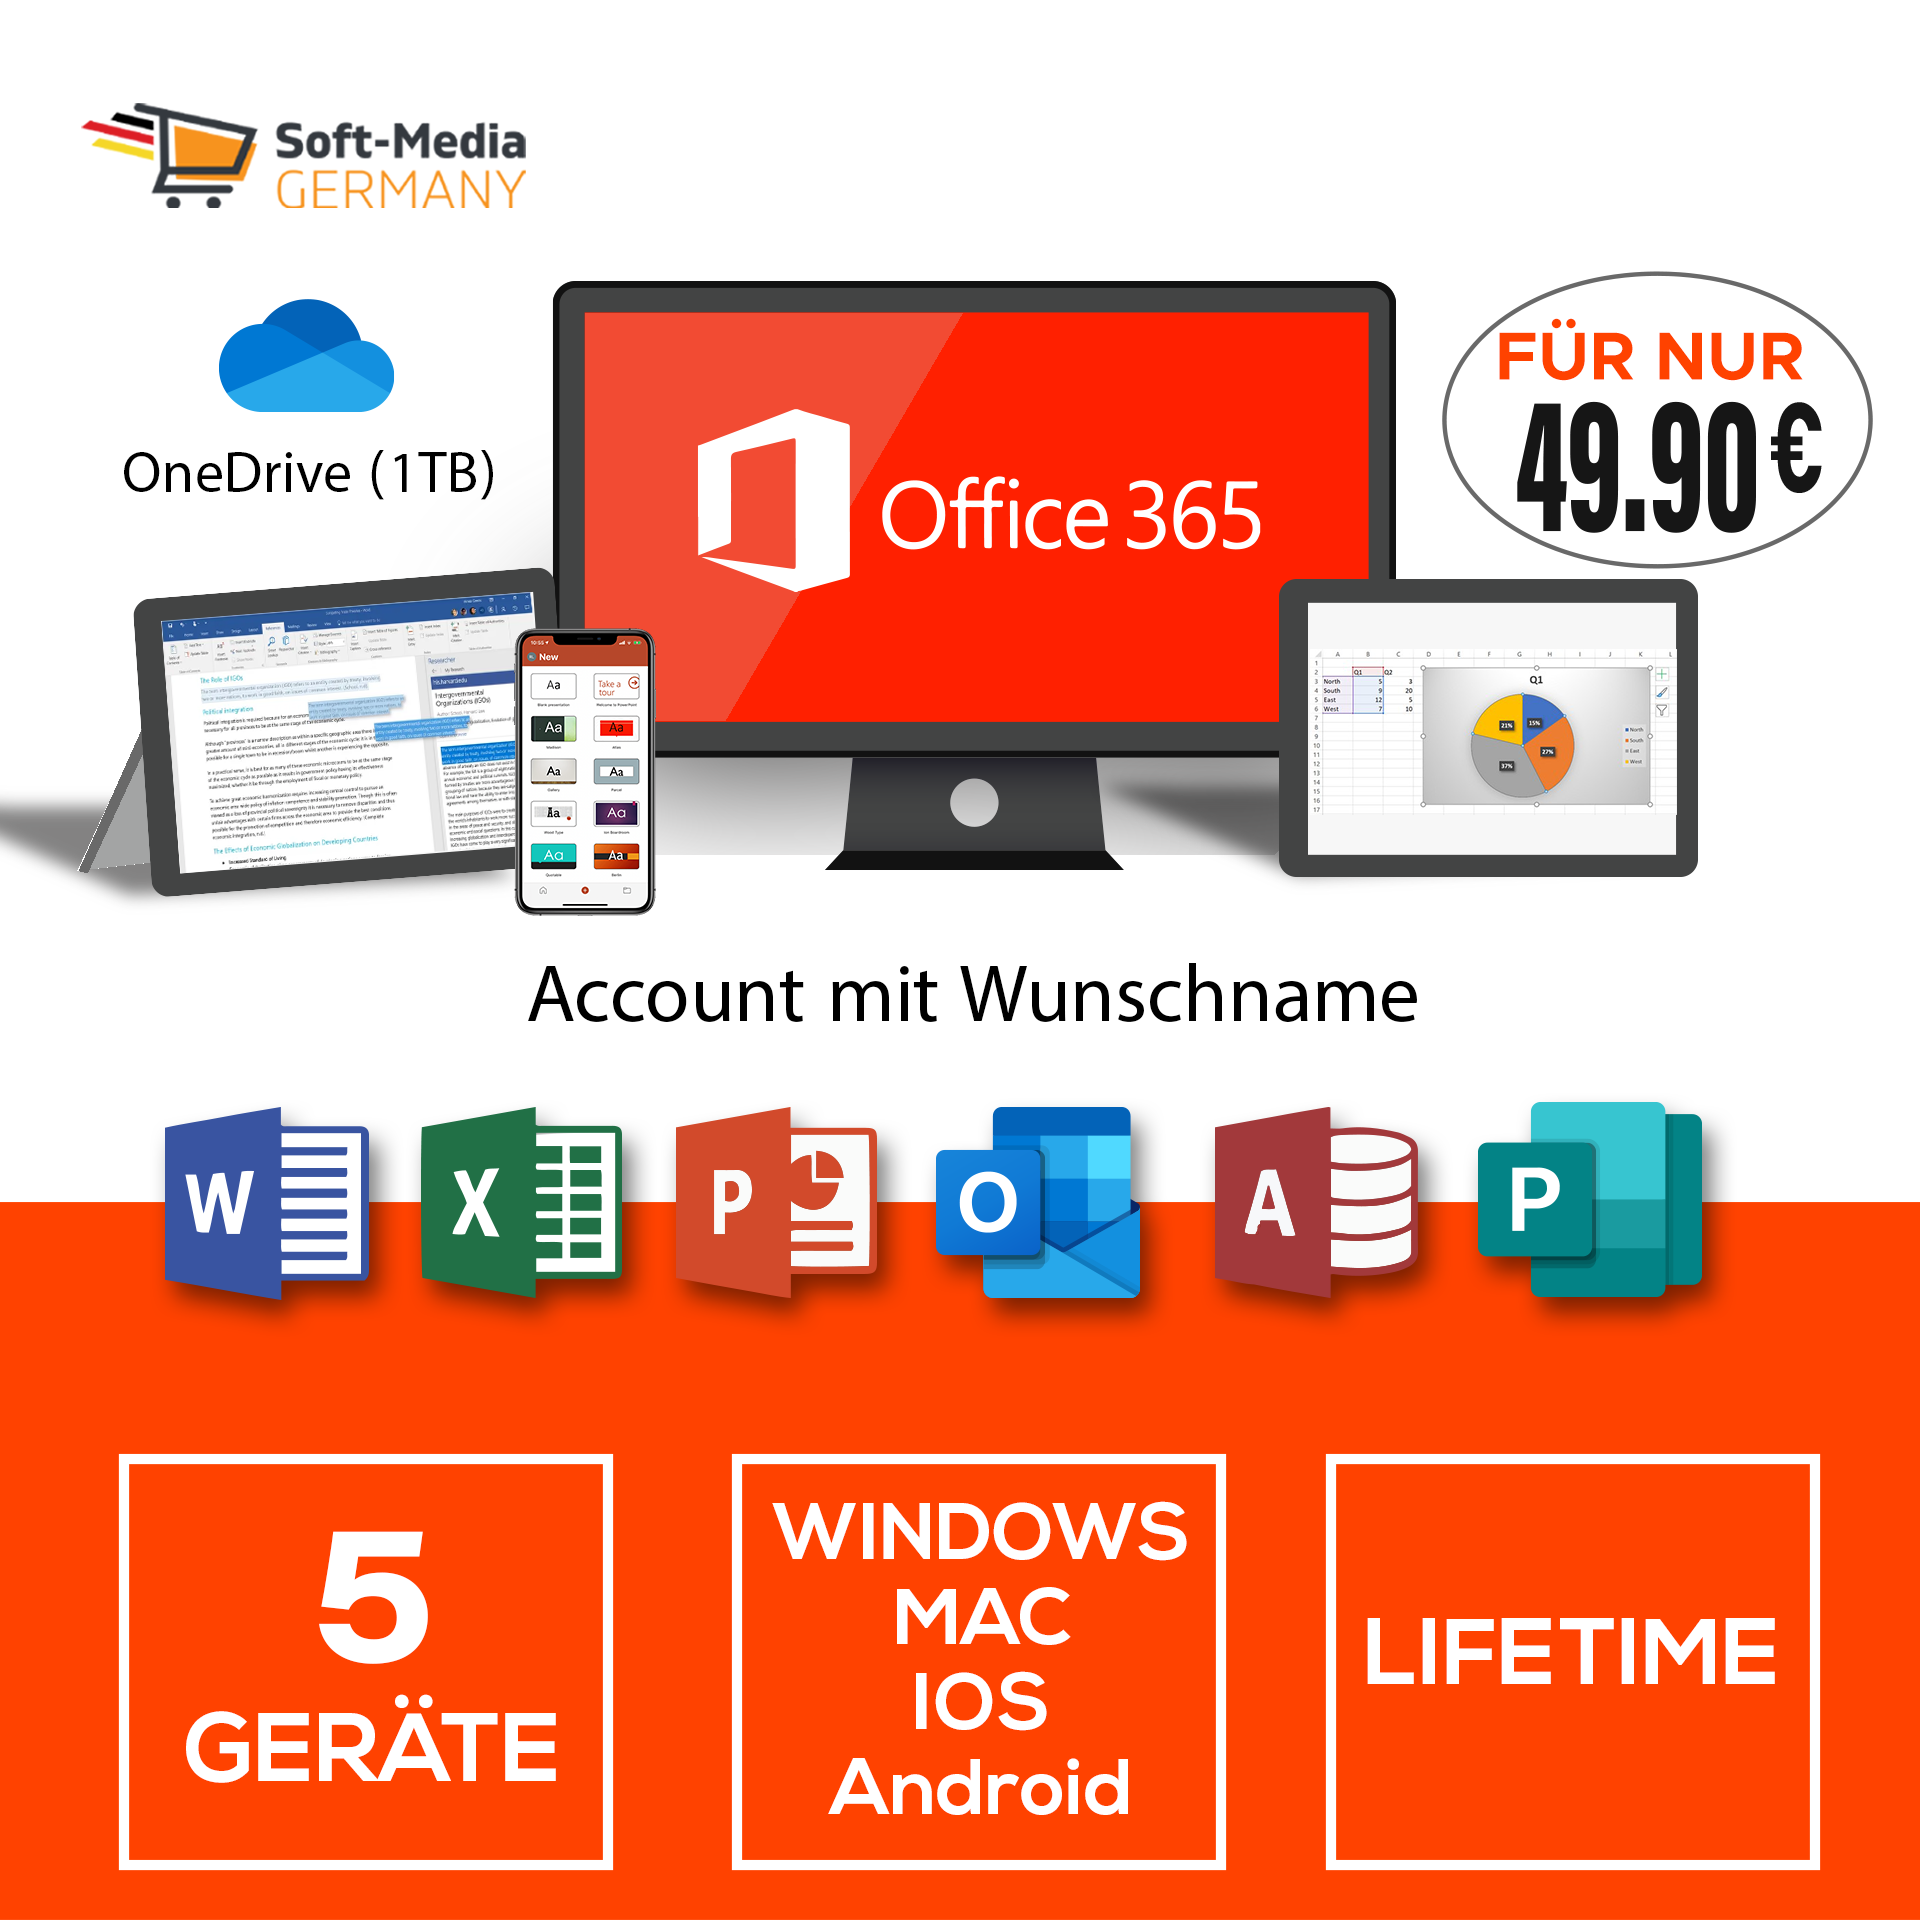 Office 365 Licenza a Vita a soli 49,90€ su Soft-Media-Germany!